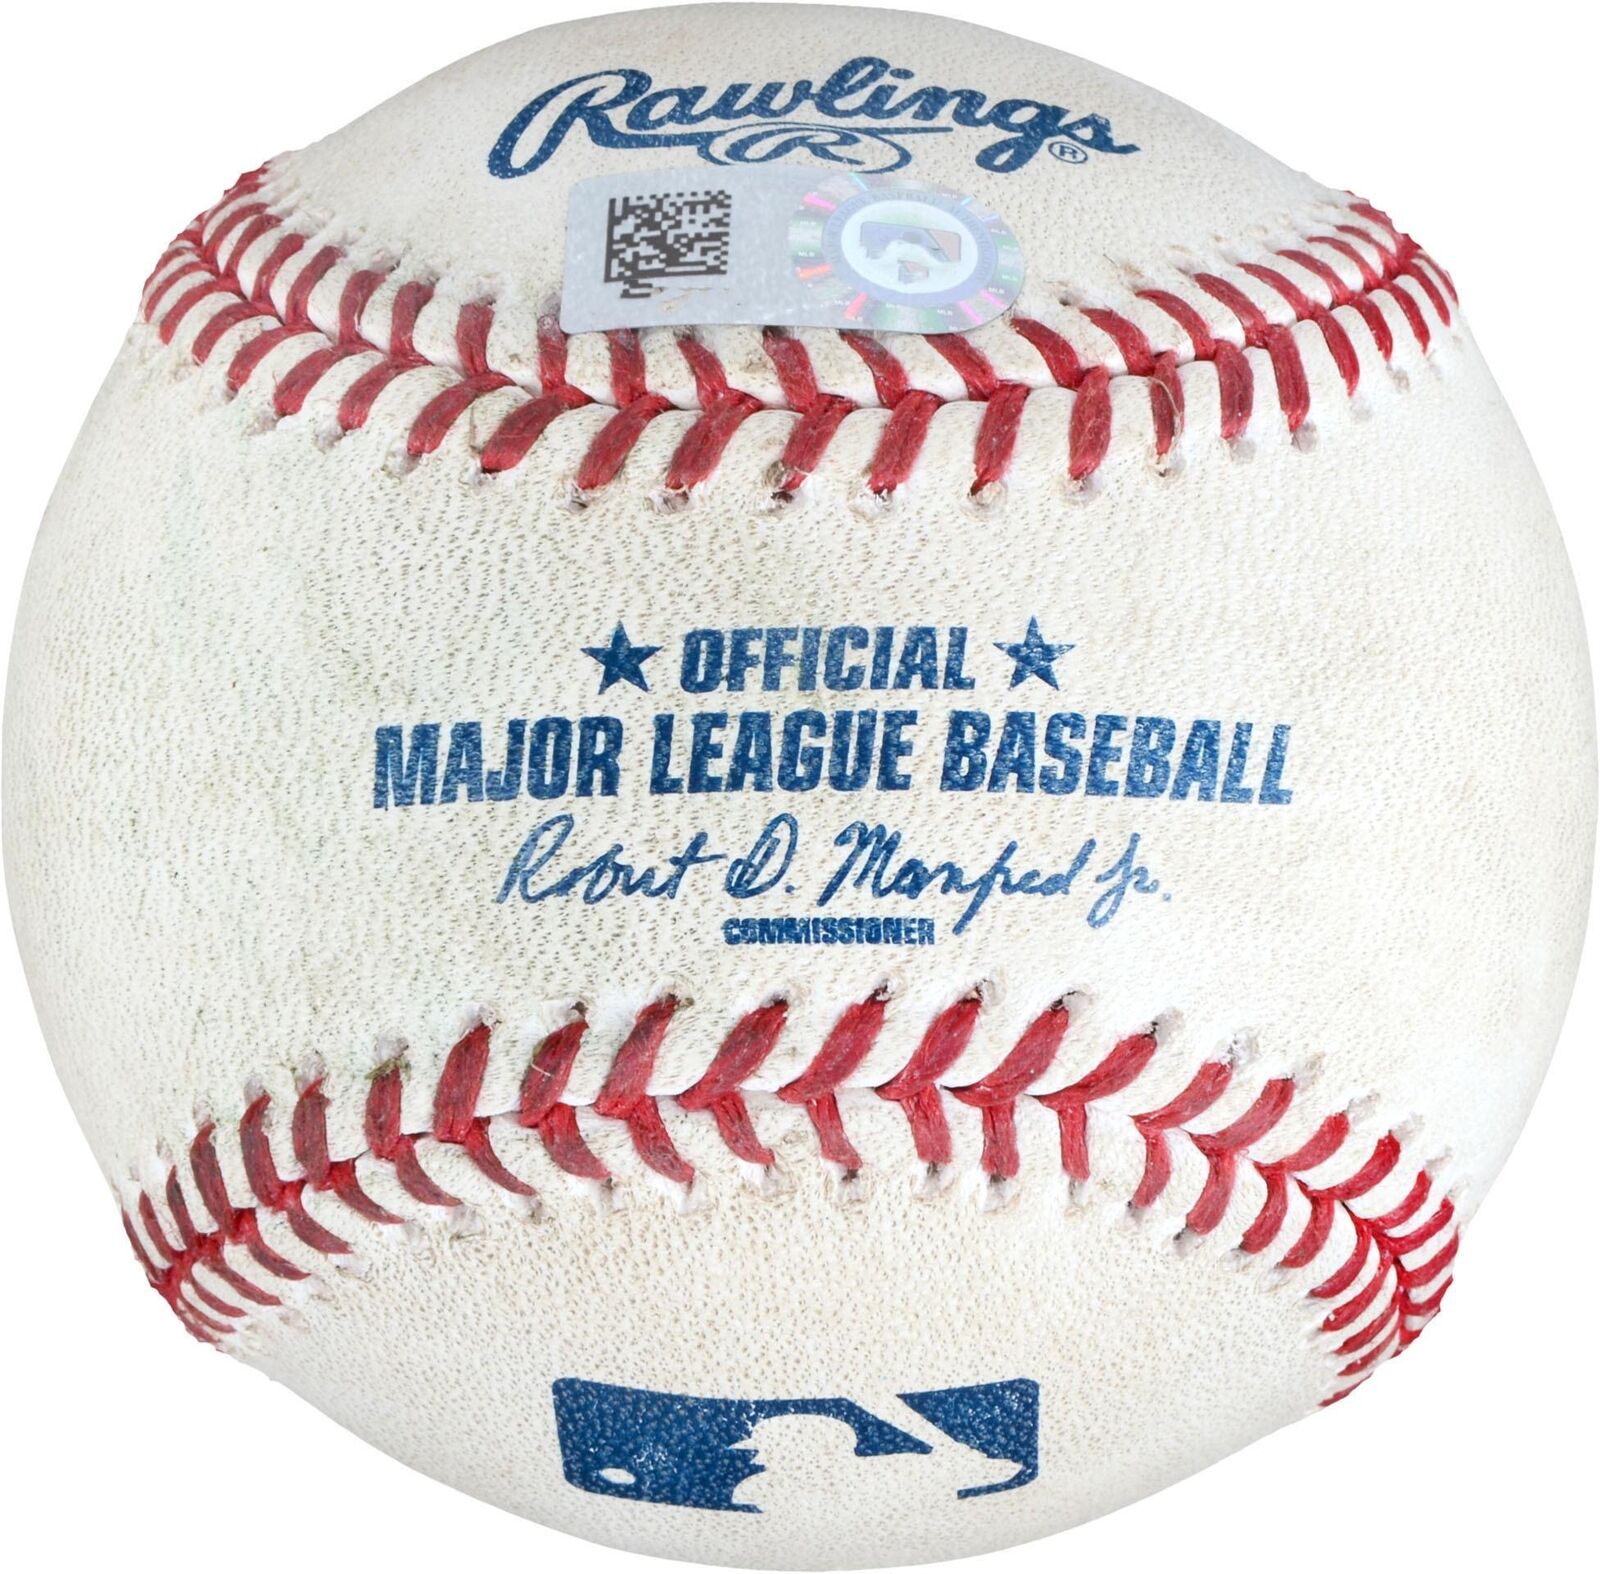 Josh Donaldson Yankees GU Baseball vs Blue Jays on August 19, 2022-Single